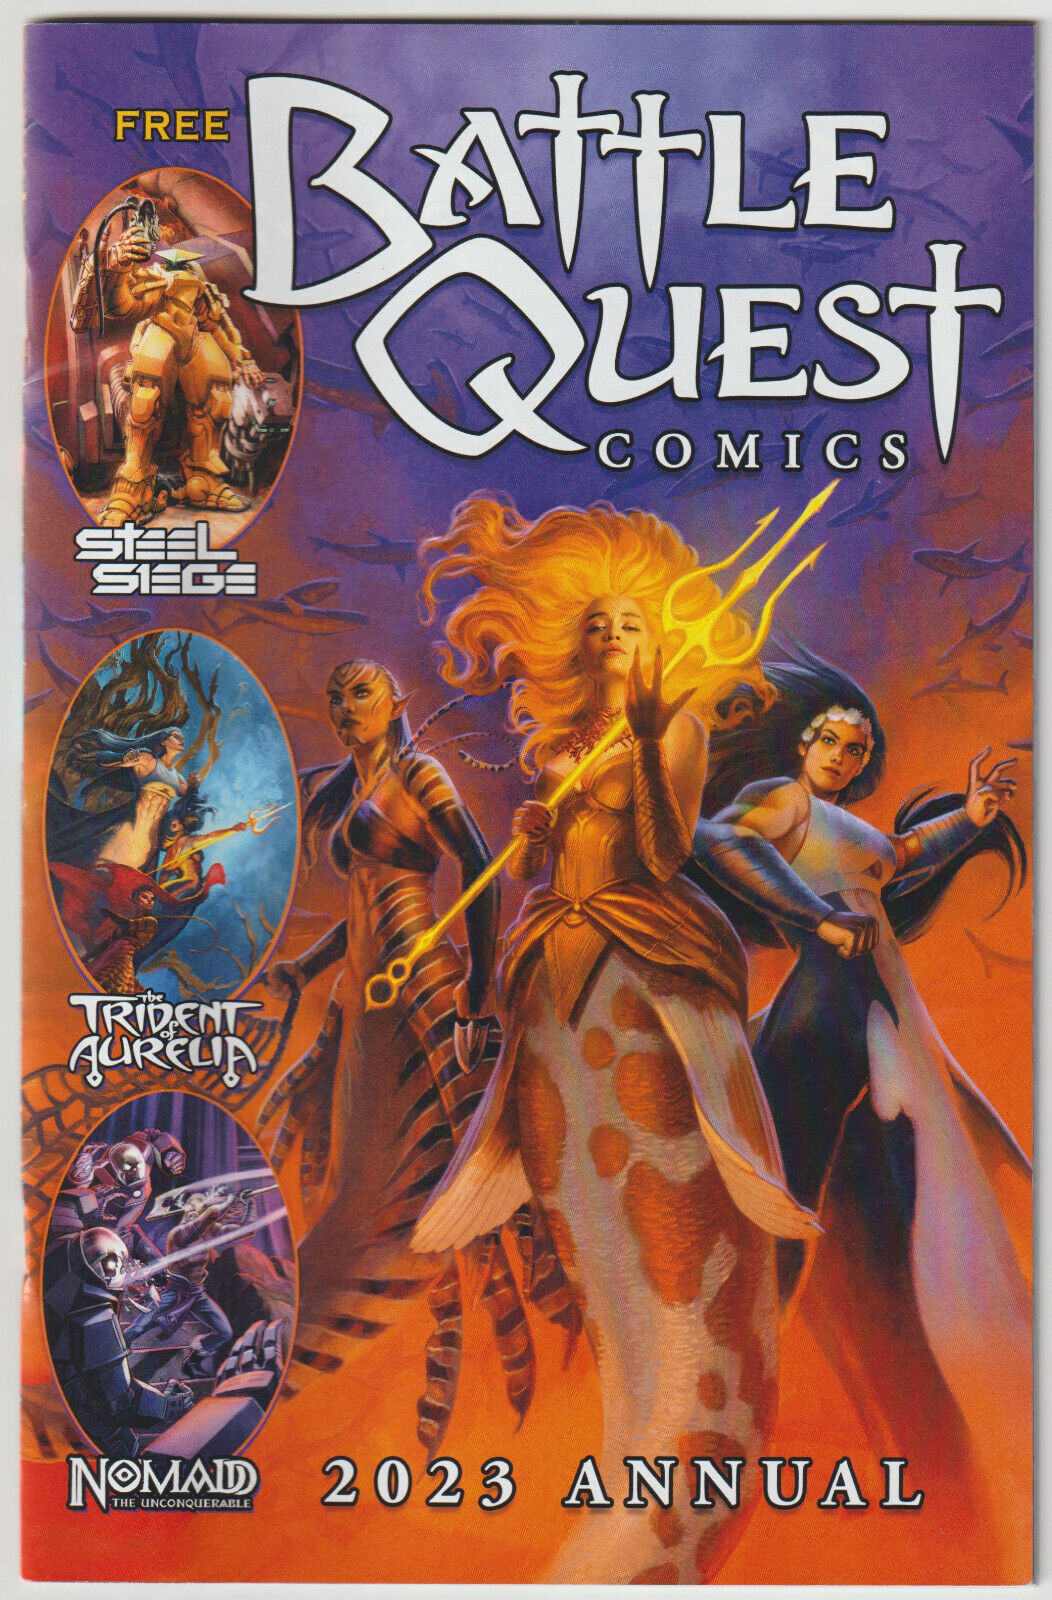 Battle Quest Comics 2023 Annual, VFN-NM condition (9.0)